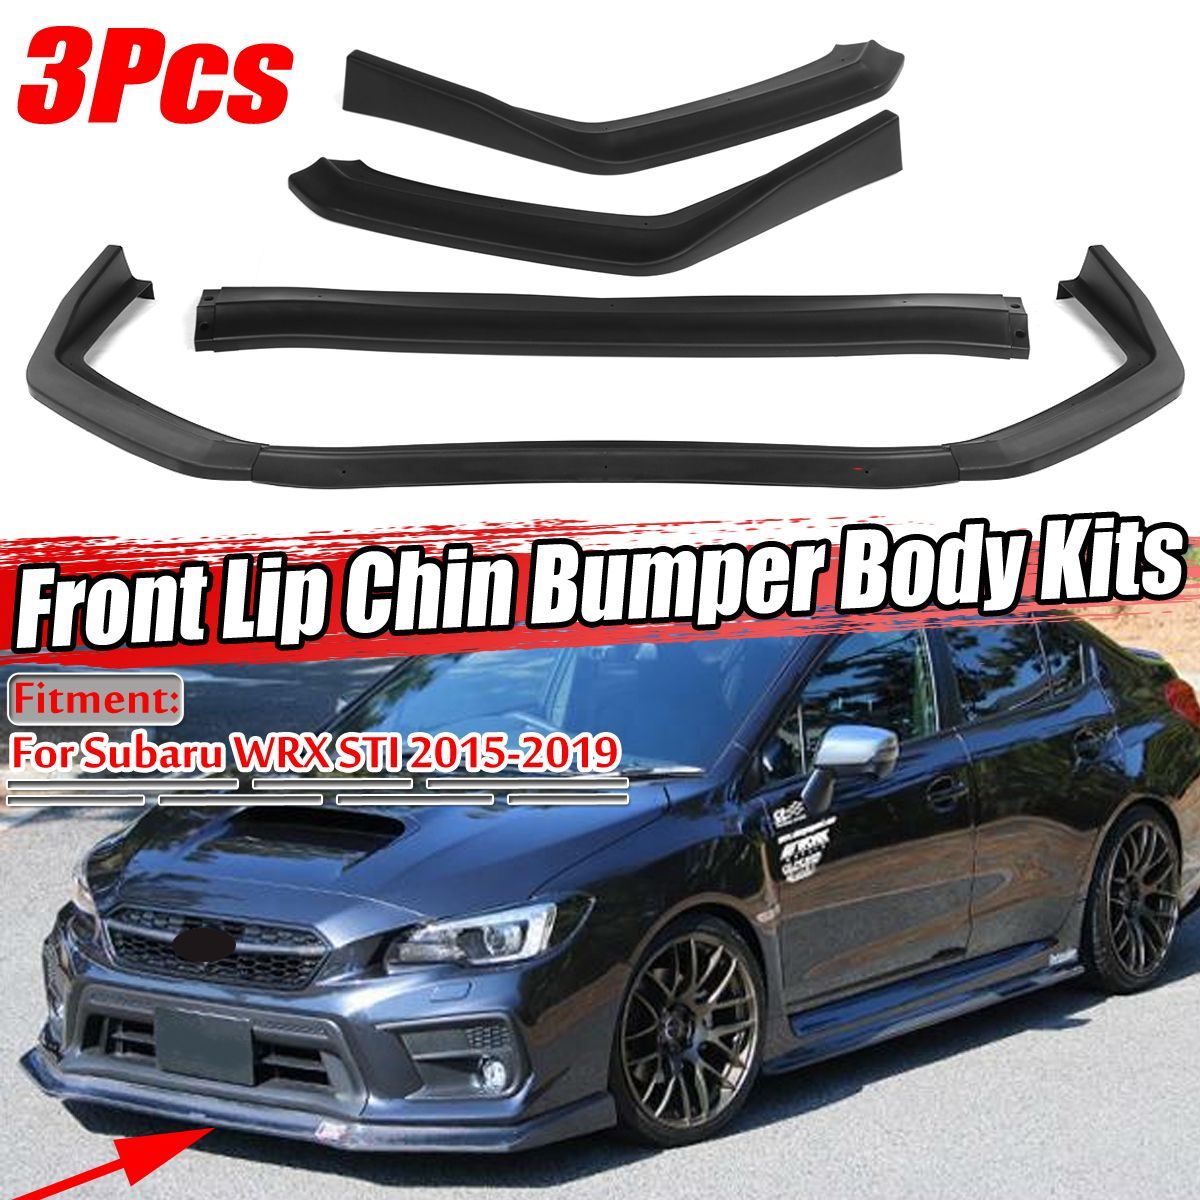 3Pcs-Front-Lip-Chin-Bumper-Body-Kits-Matte-Black-For-Subaru-WRX-STI-2015-2019-1684879